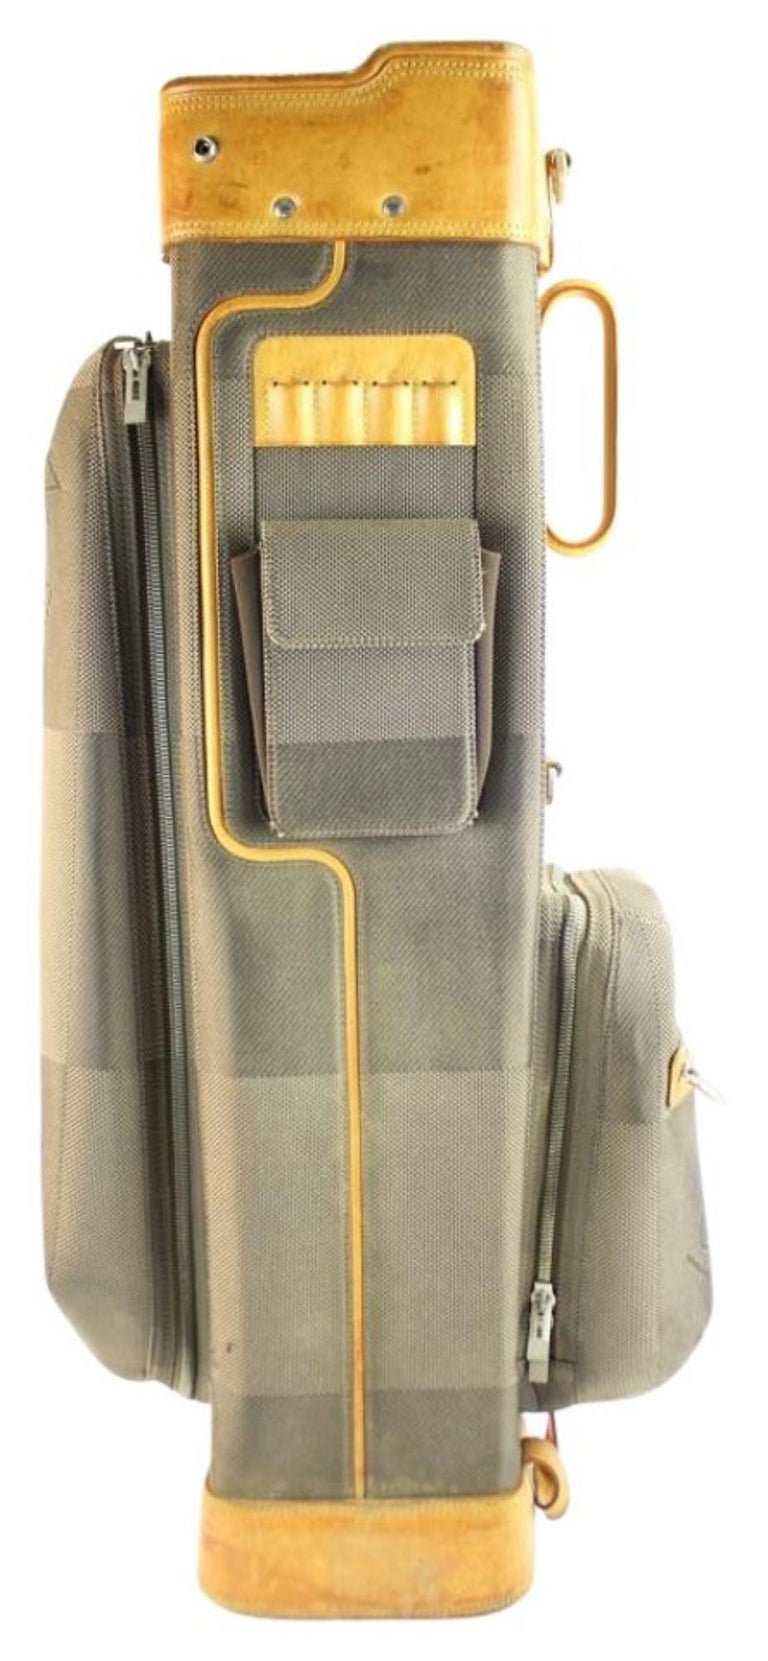 Louis Vuitton Golf Bag - 2 For Sale on 1stDibs